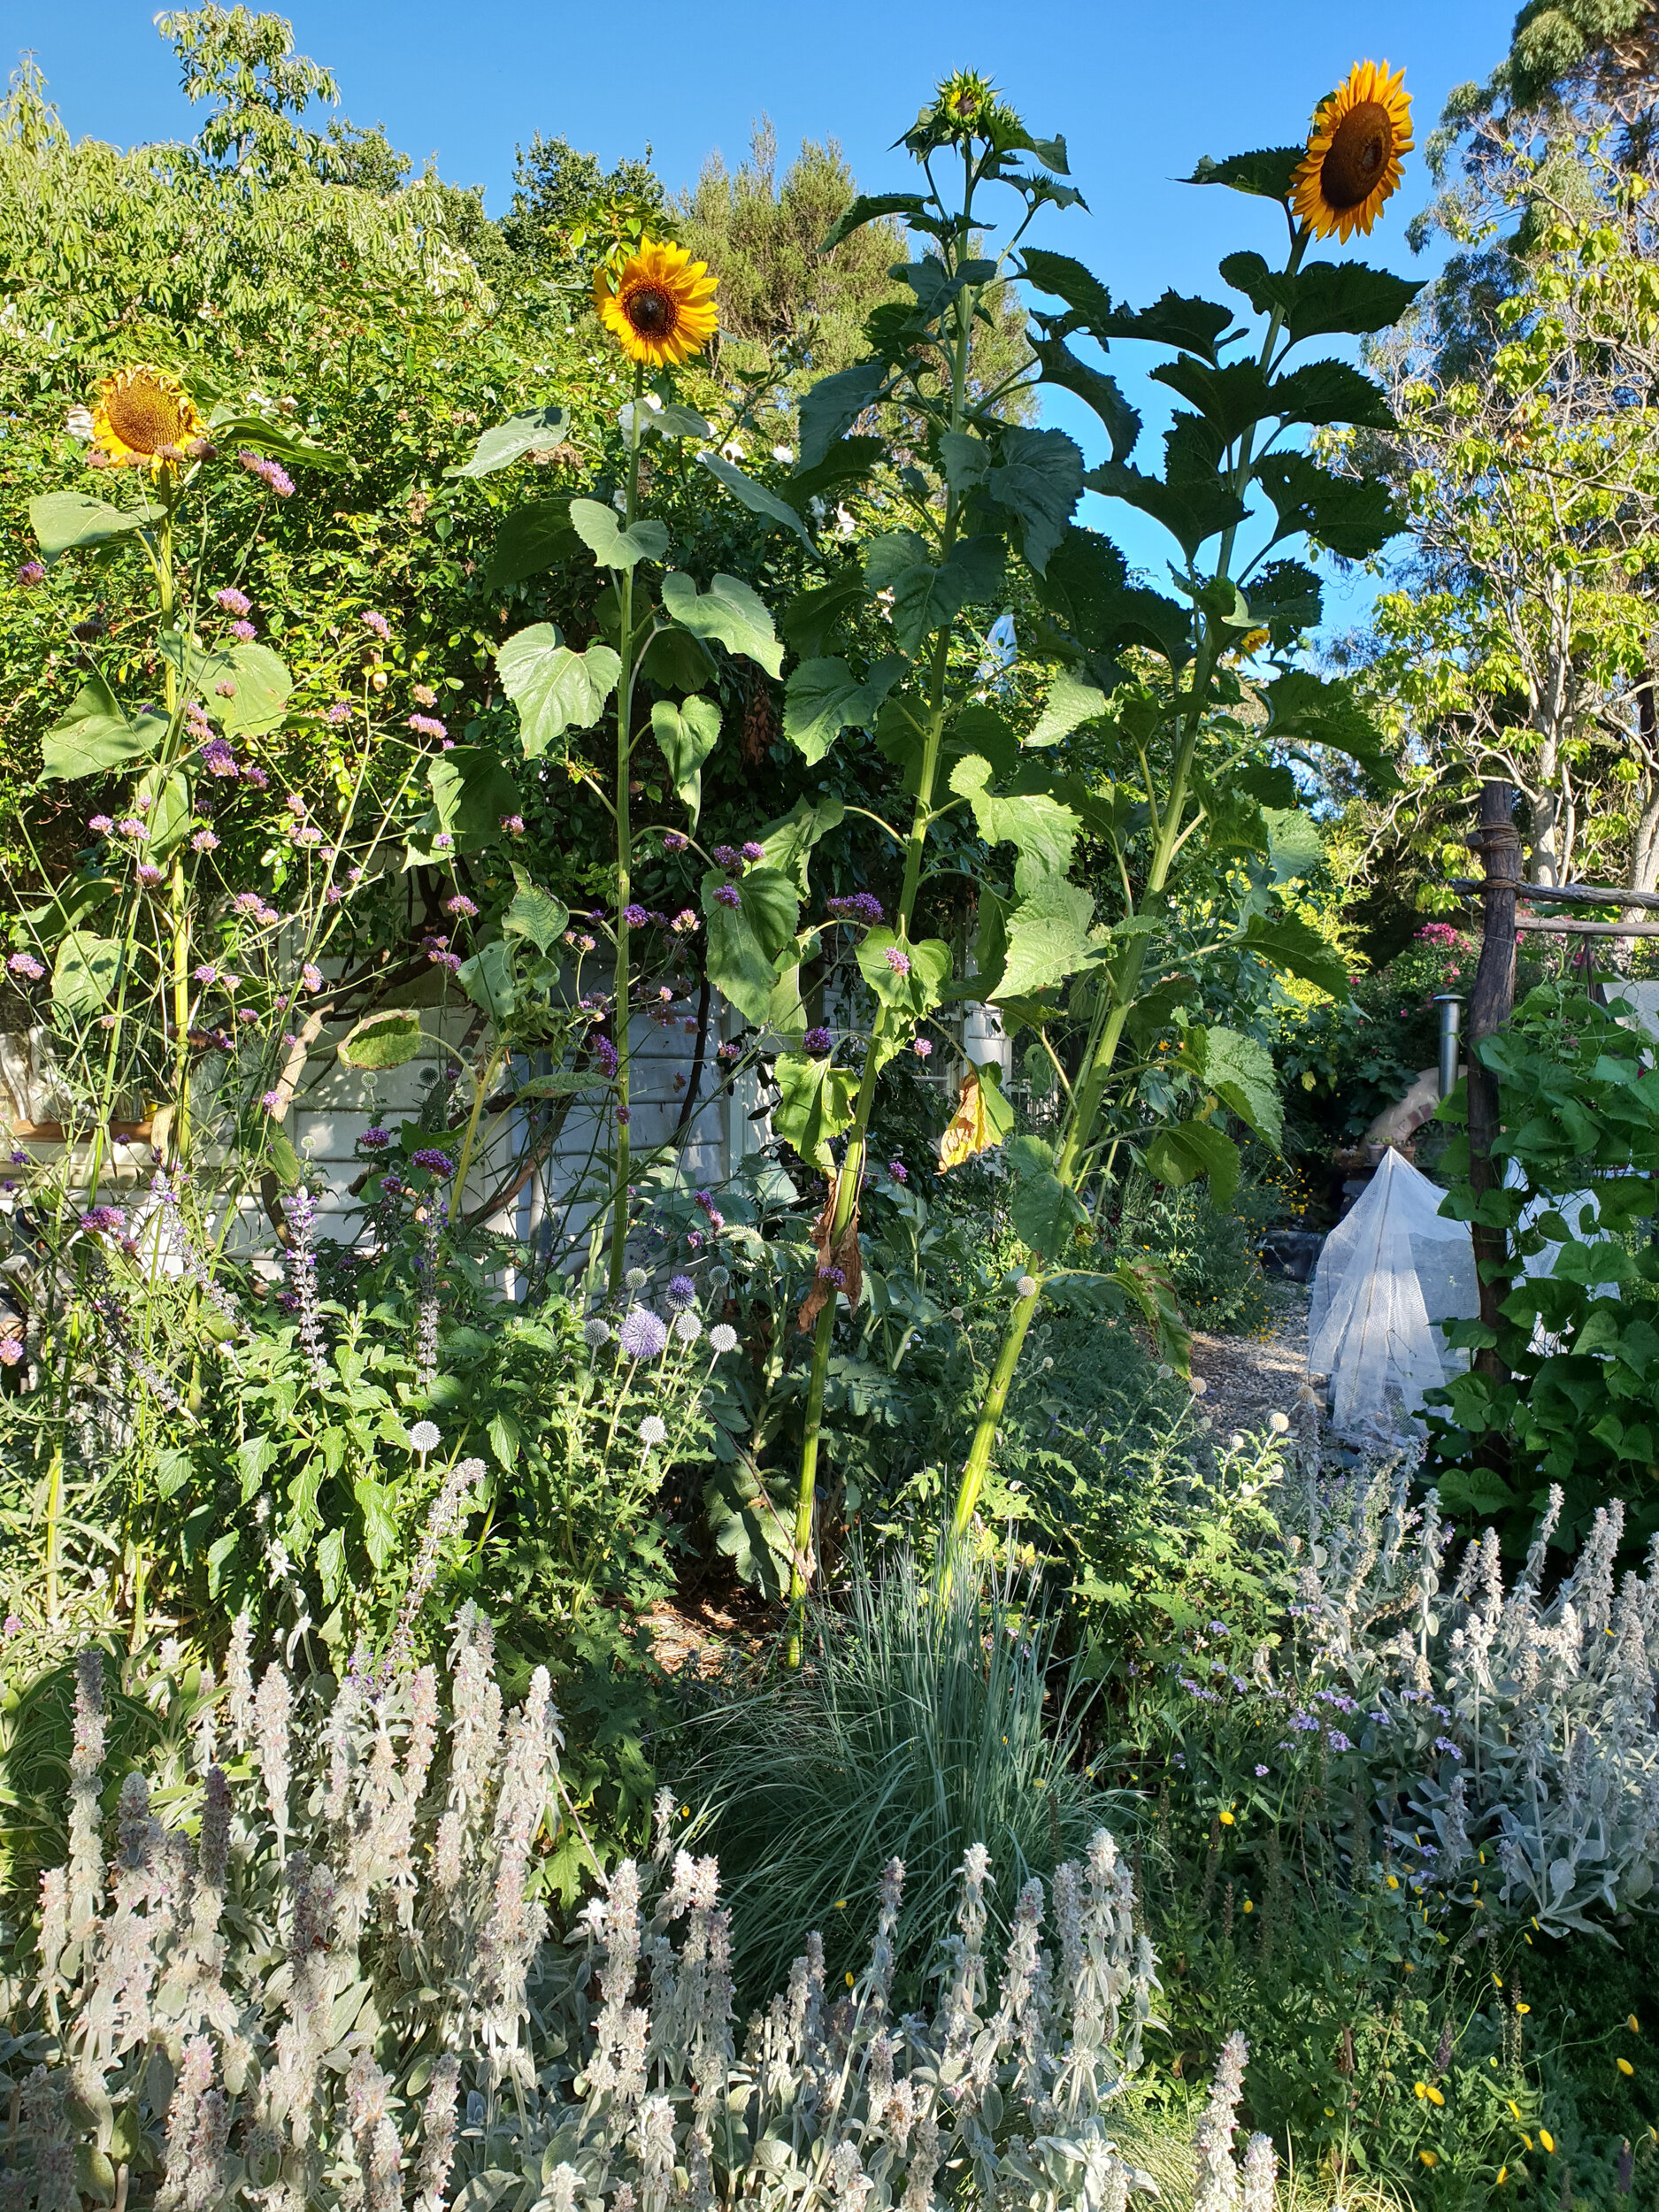 Hopi Sunflowers reaching for the sky